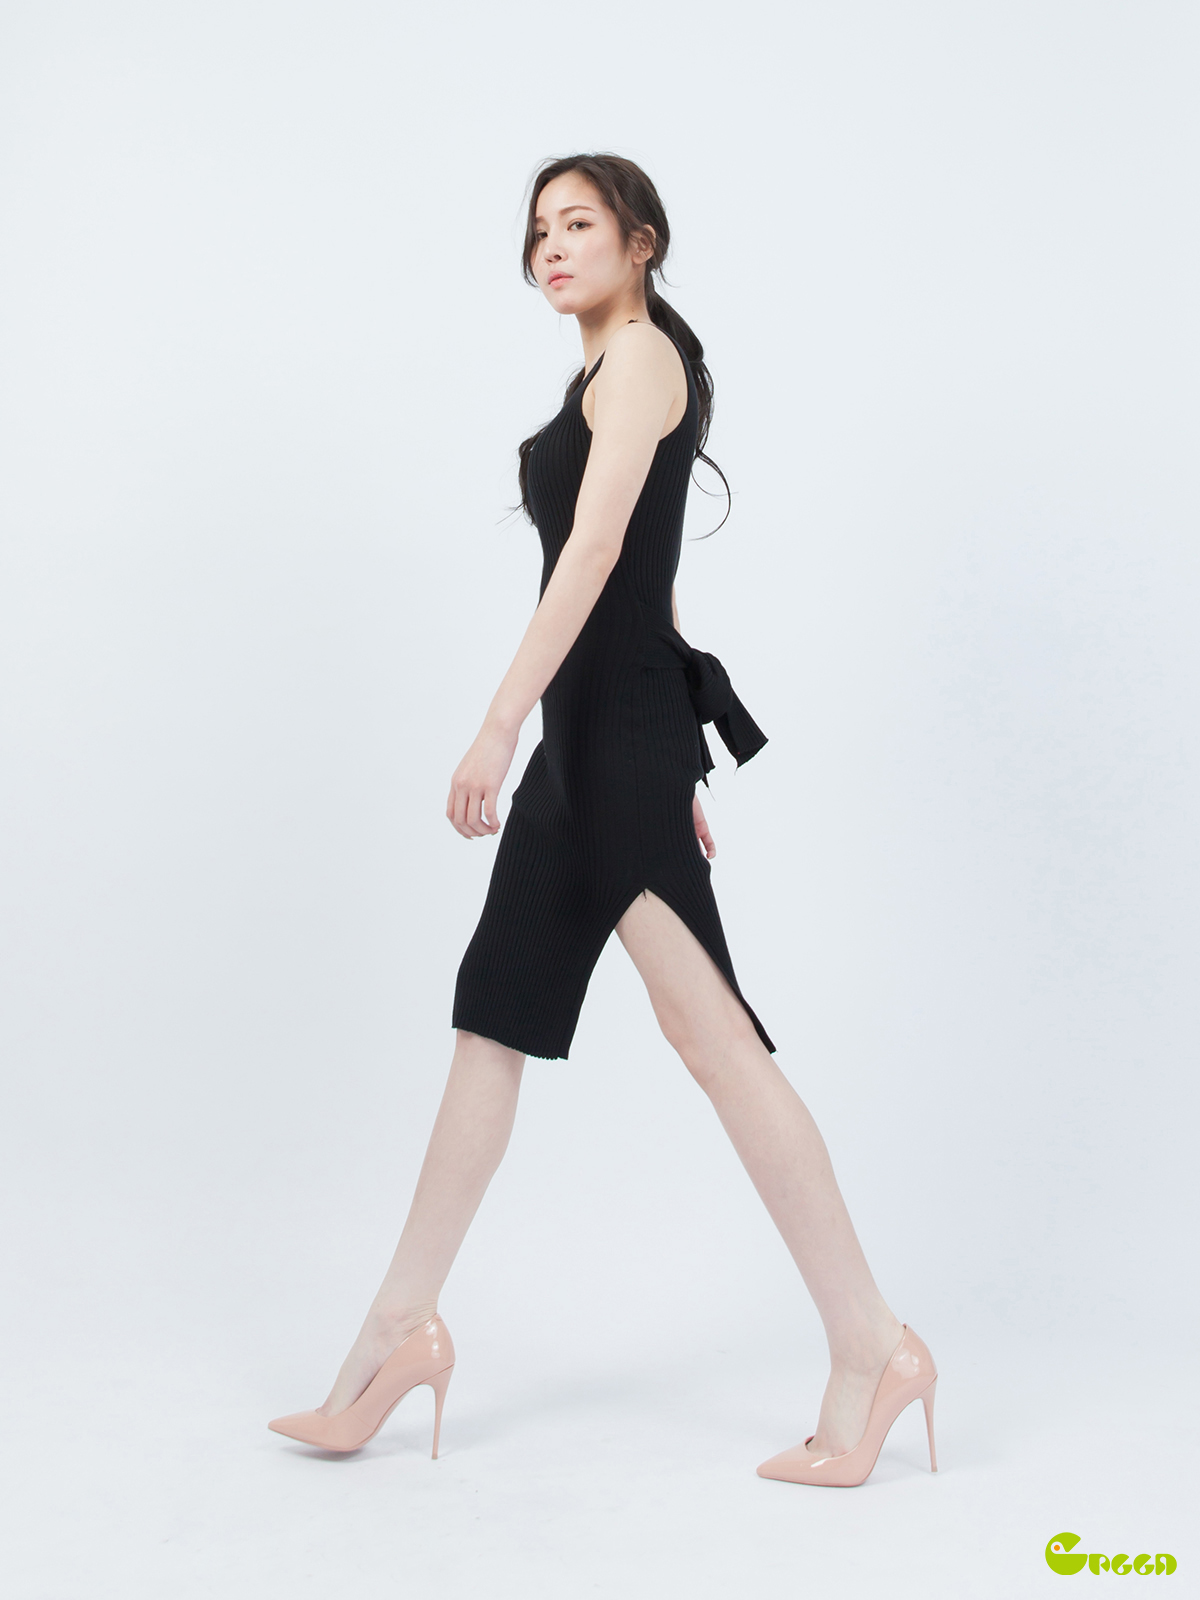 Model - 夏冰 - 宣傳照(一) - 格林藝能Green Model Agency Taiwan